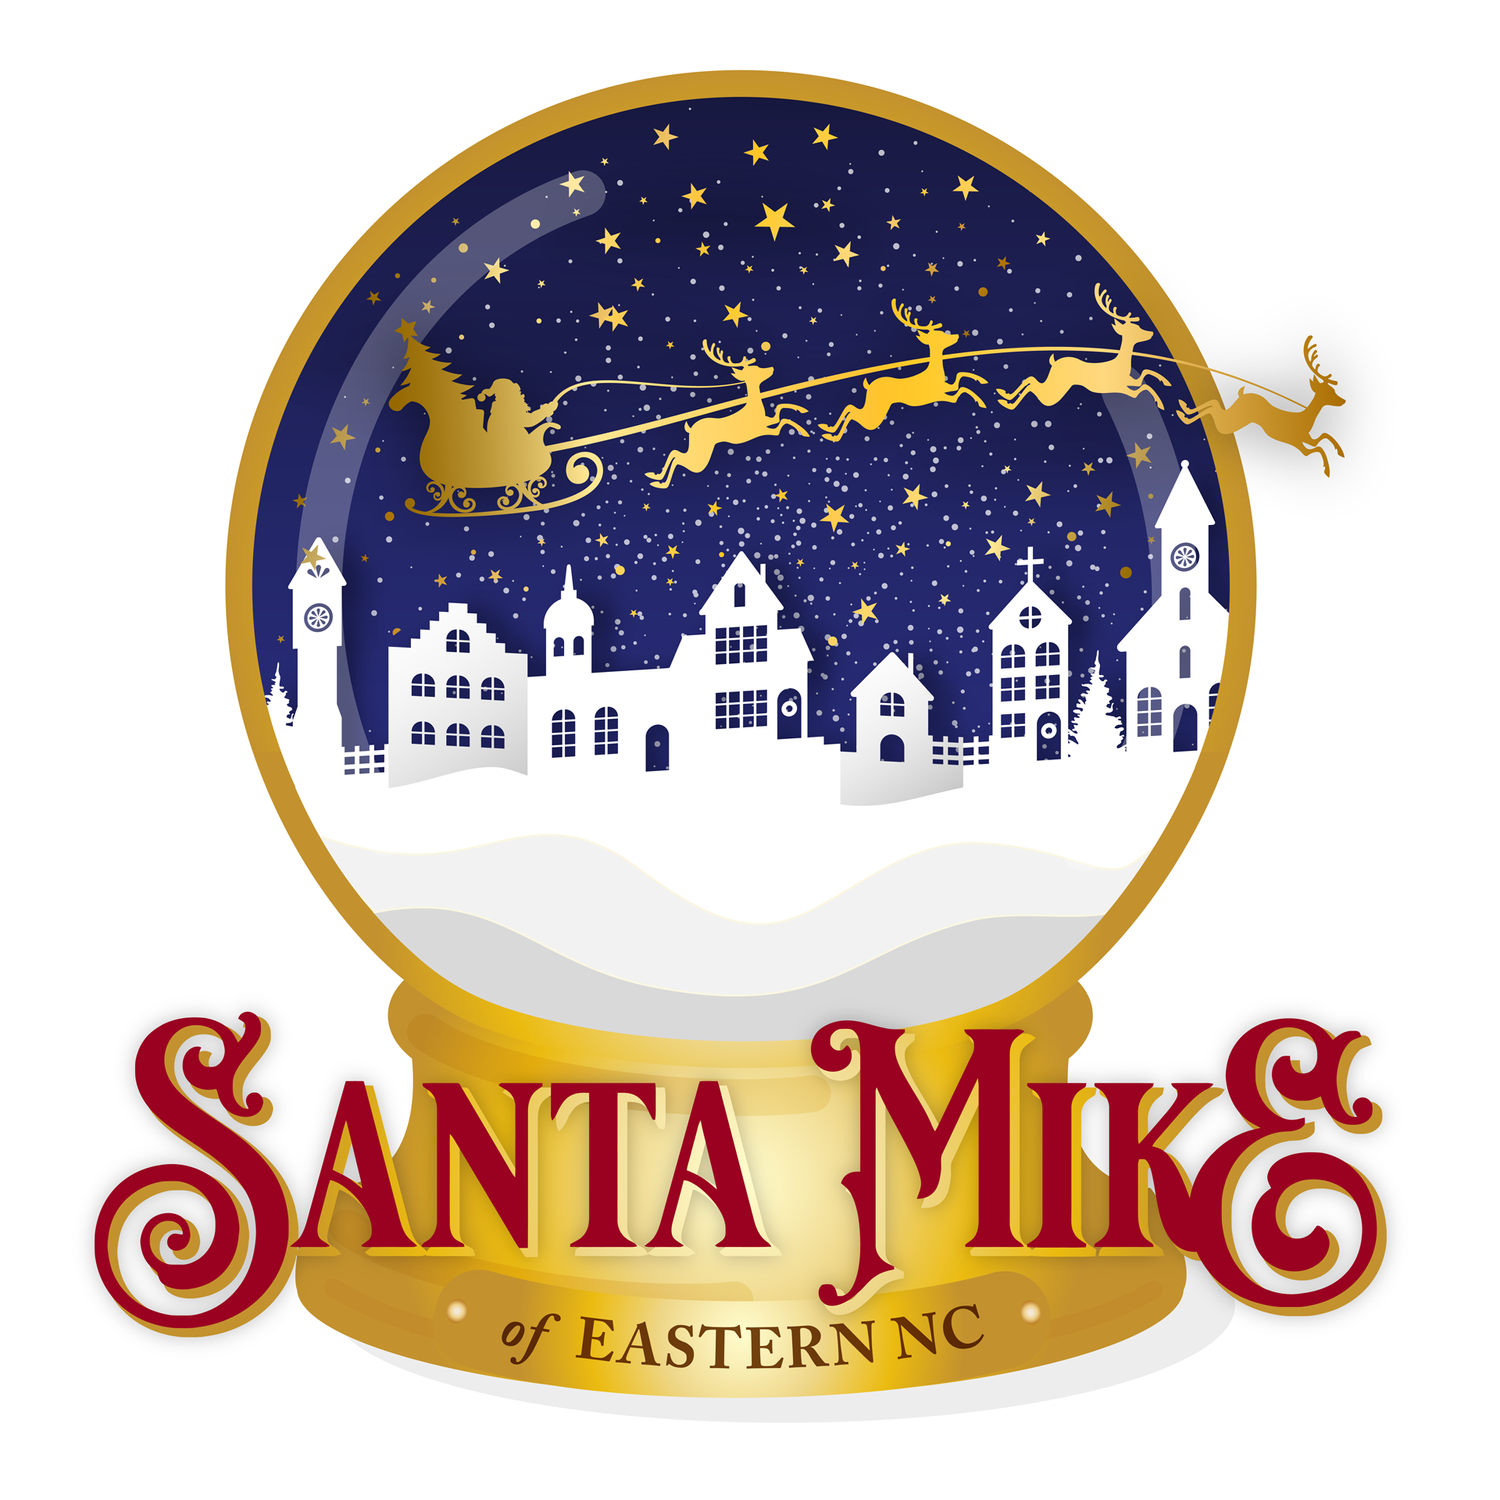 Santa Mike of Eastern North Carolina